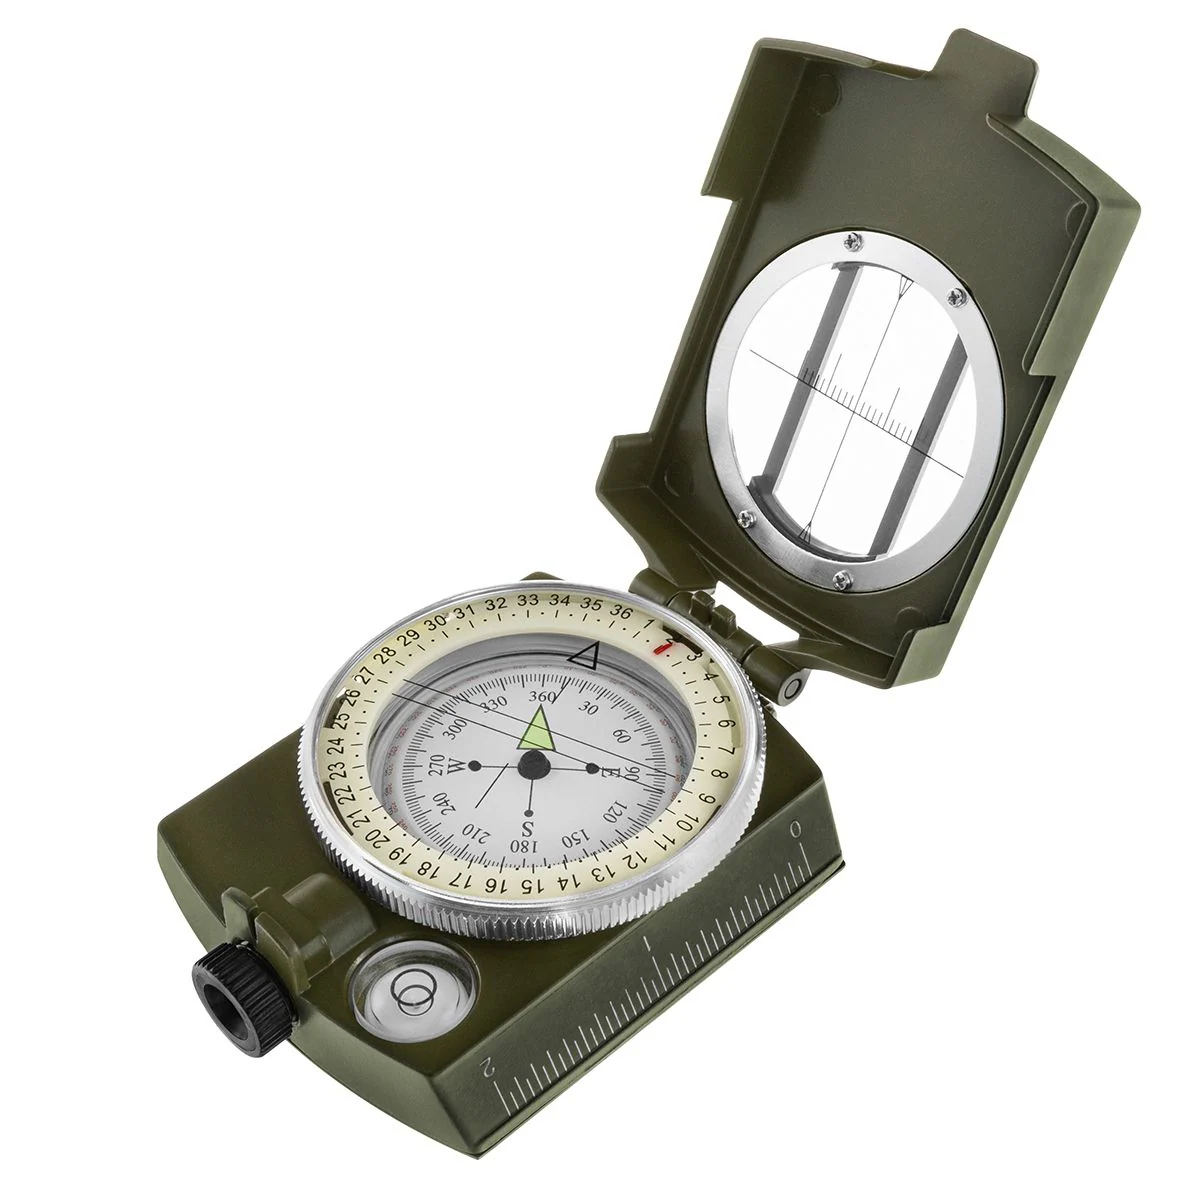 832804_kompas-badger-outdoor-prisma-military-bo-cm-prm